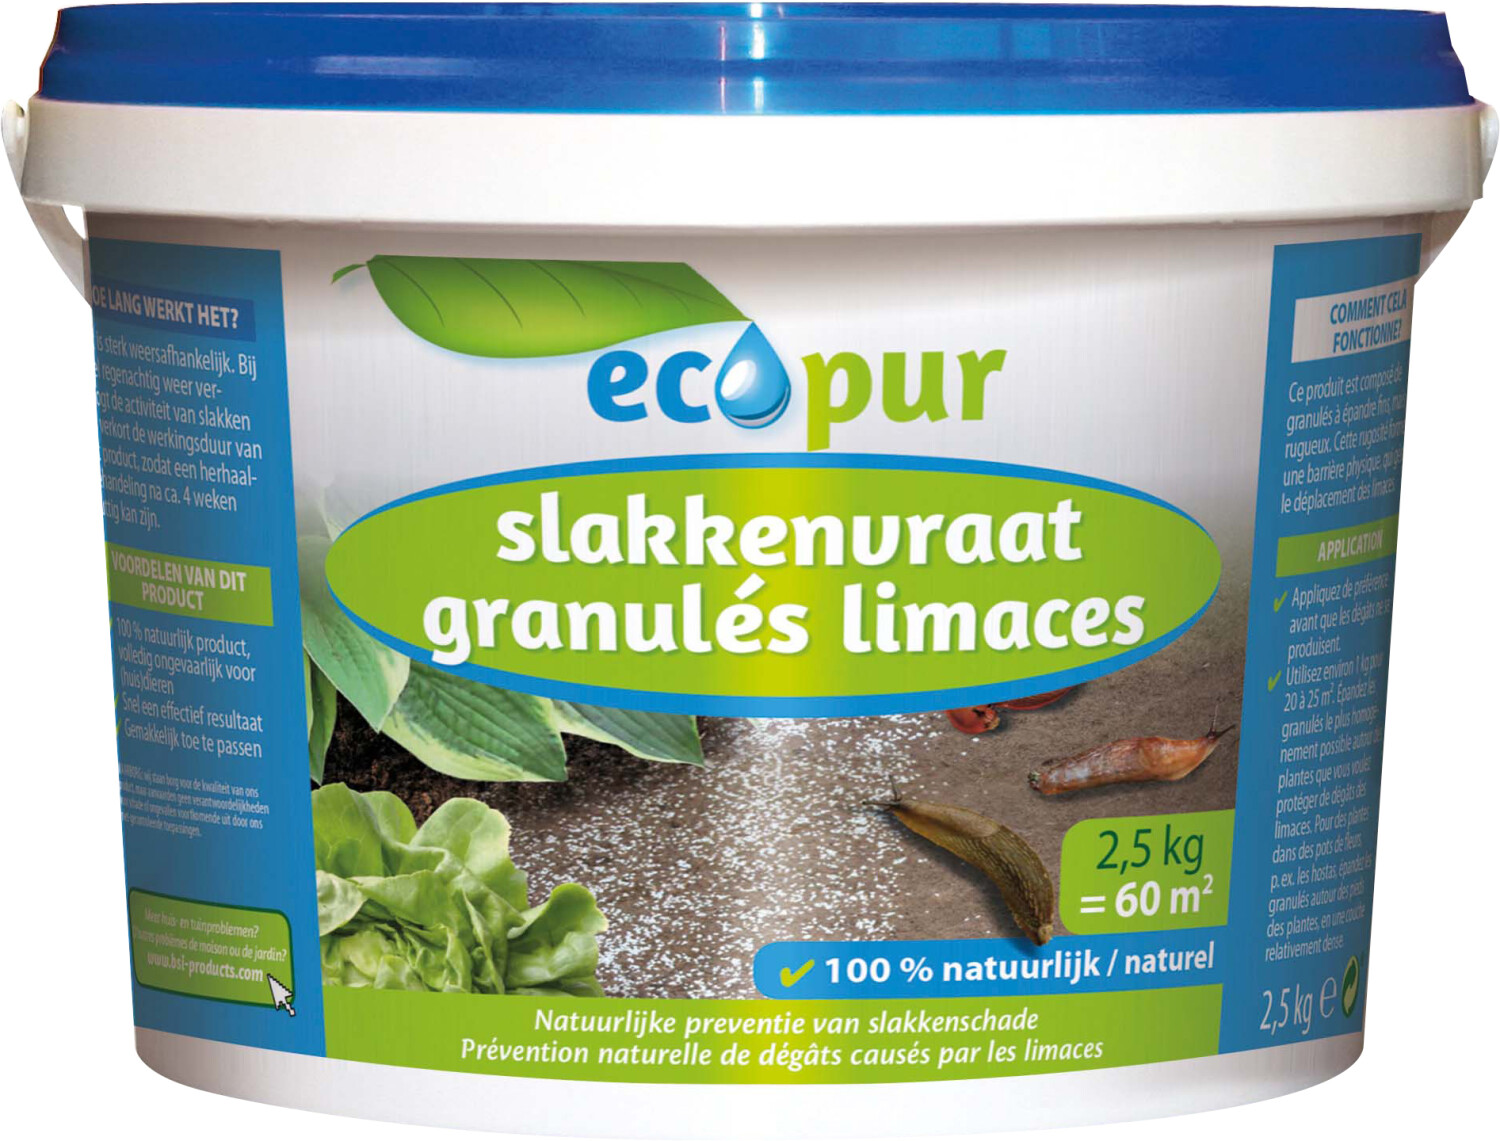 Ecokuur Slakkenvraat - Ongediertebestrijding - 2.5 kg